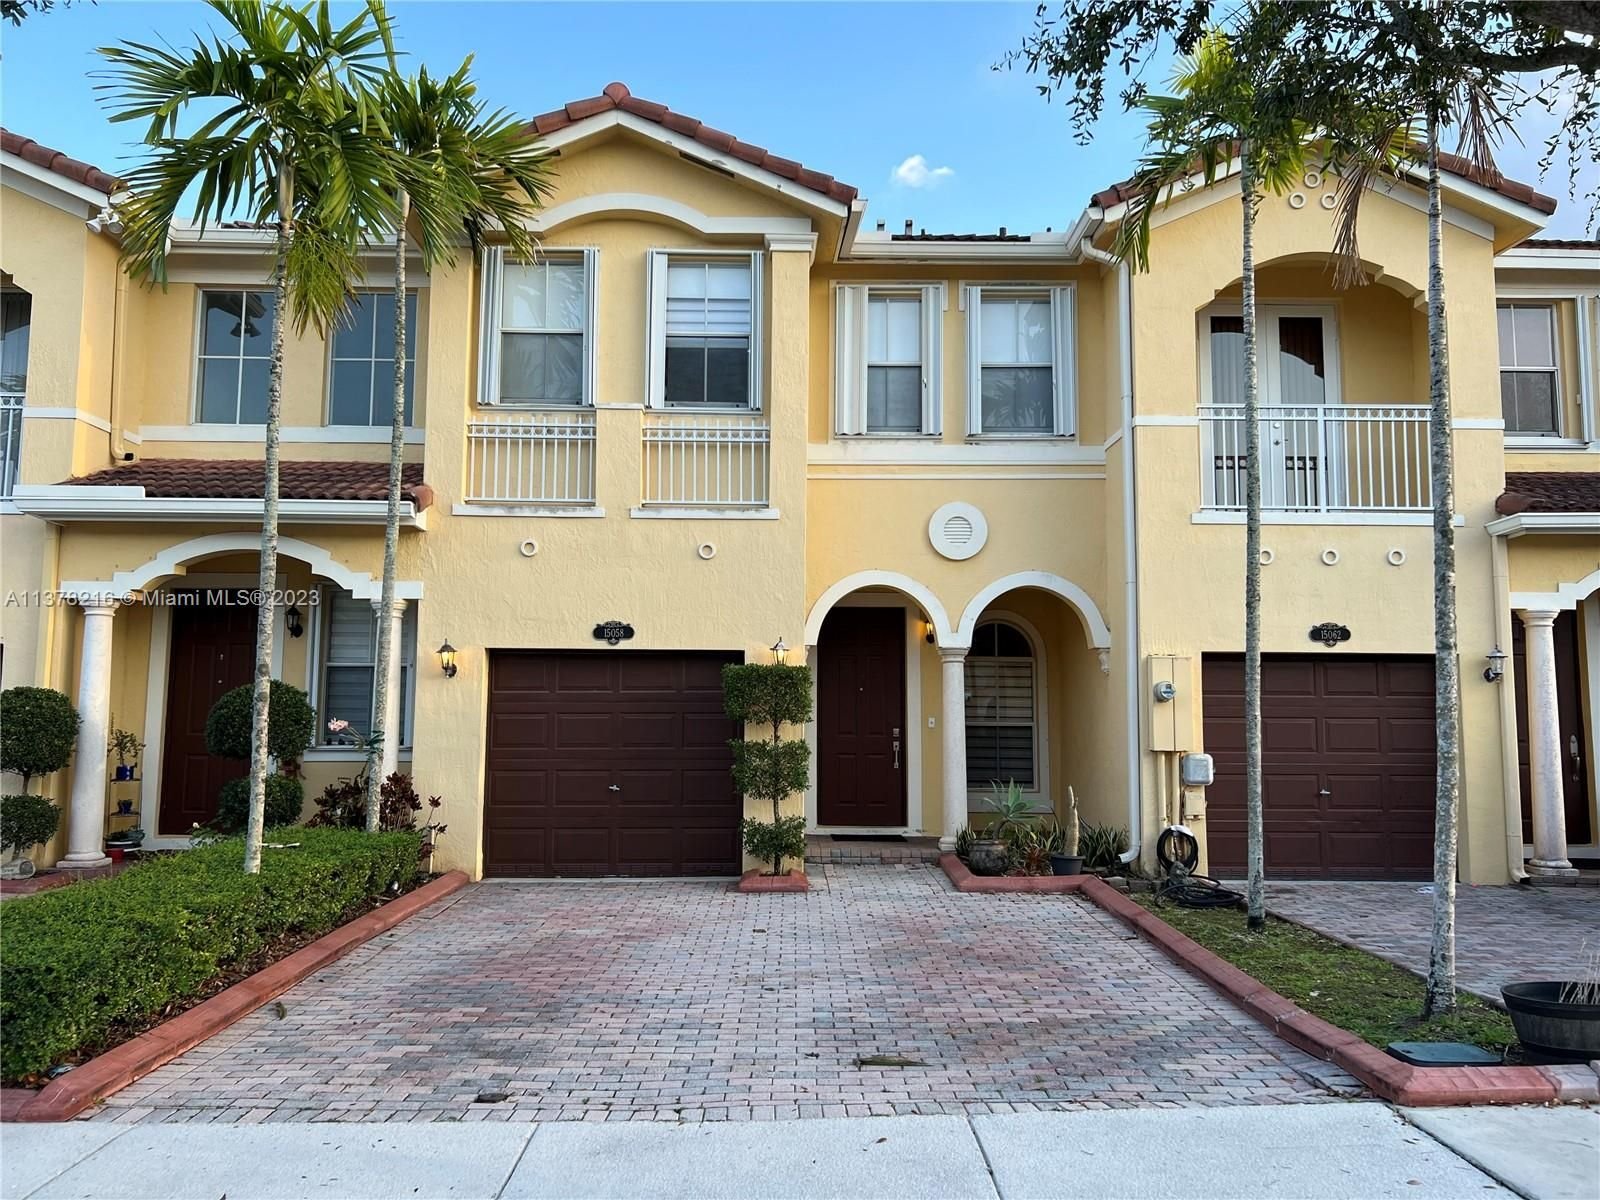 Real estate property located at 15058 9th Way #15058, Miami-Dade County, Miami, FL